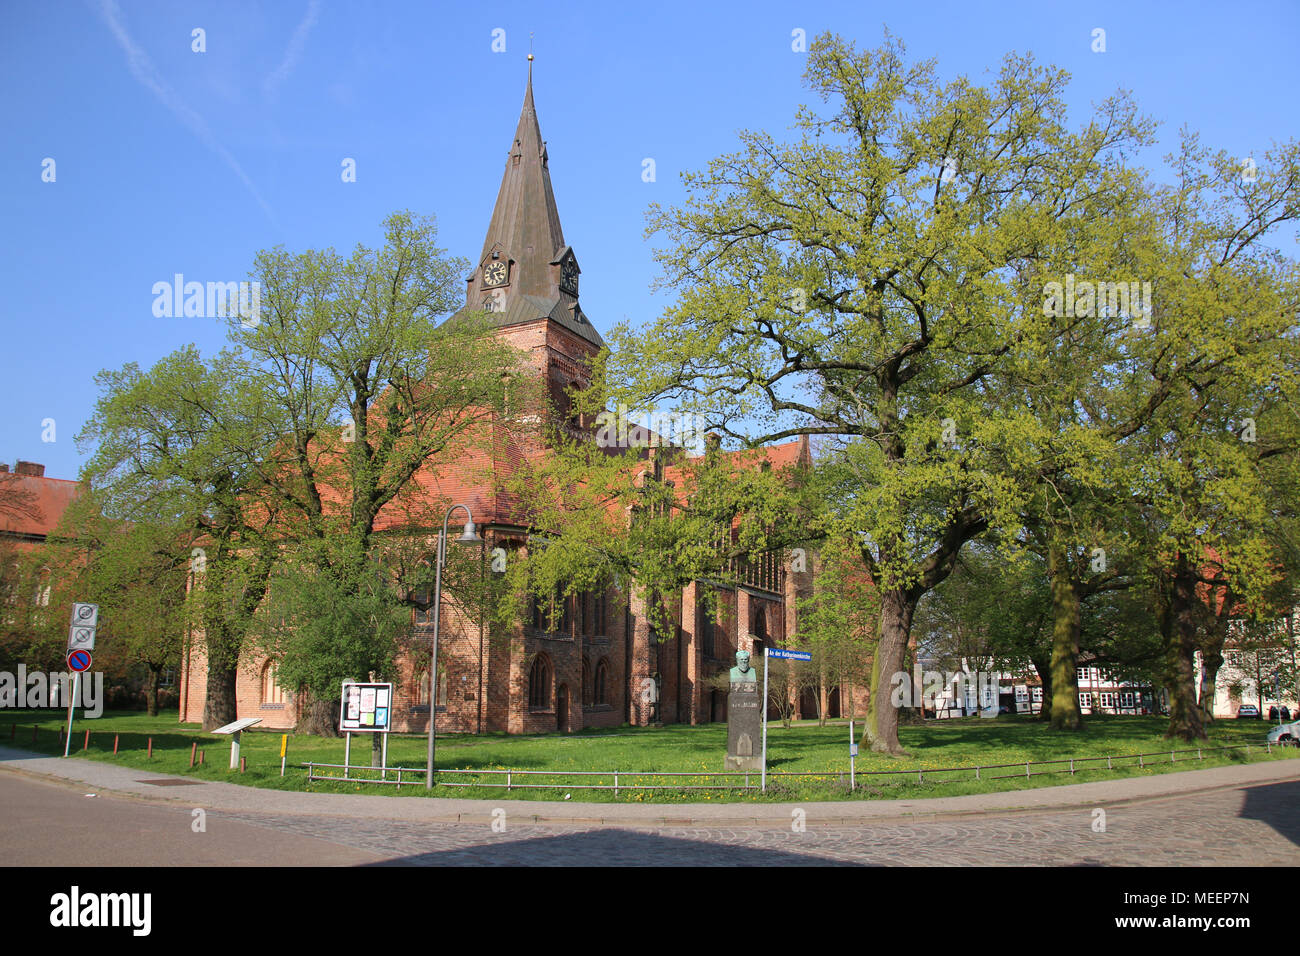 Salzwedel, Germany - April 20, 2018: View of St. Catherine's Church in the Hanseatic city of Salzwedel in Altmark, Germany. Stock Photo